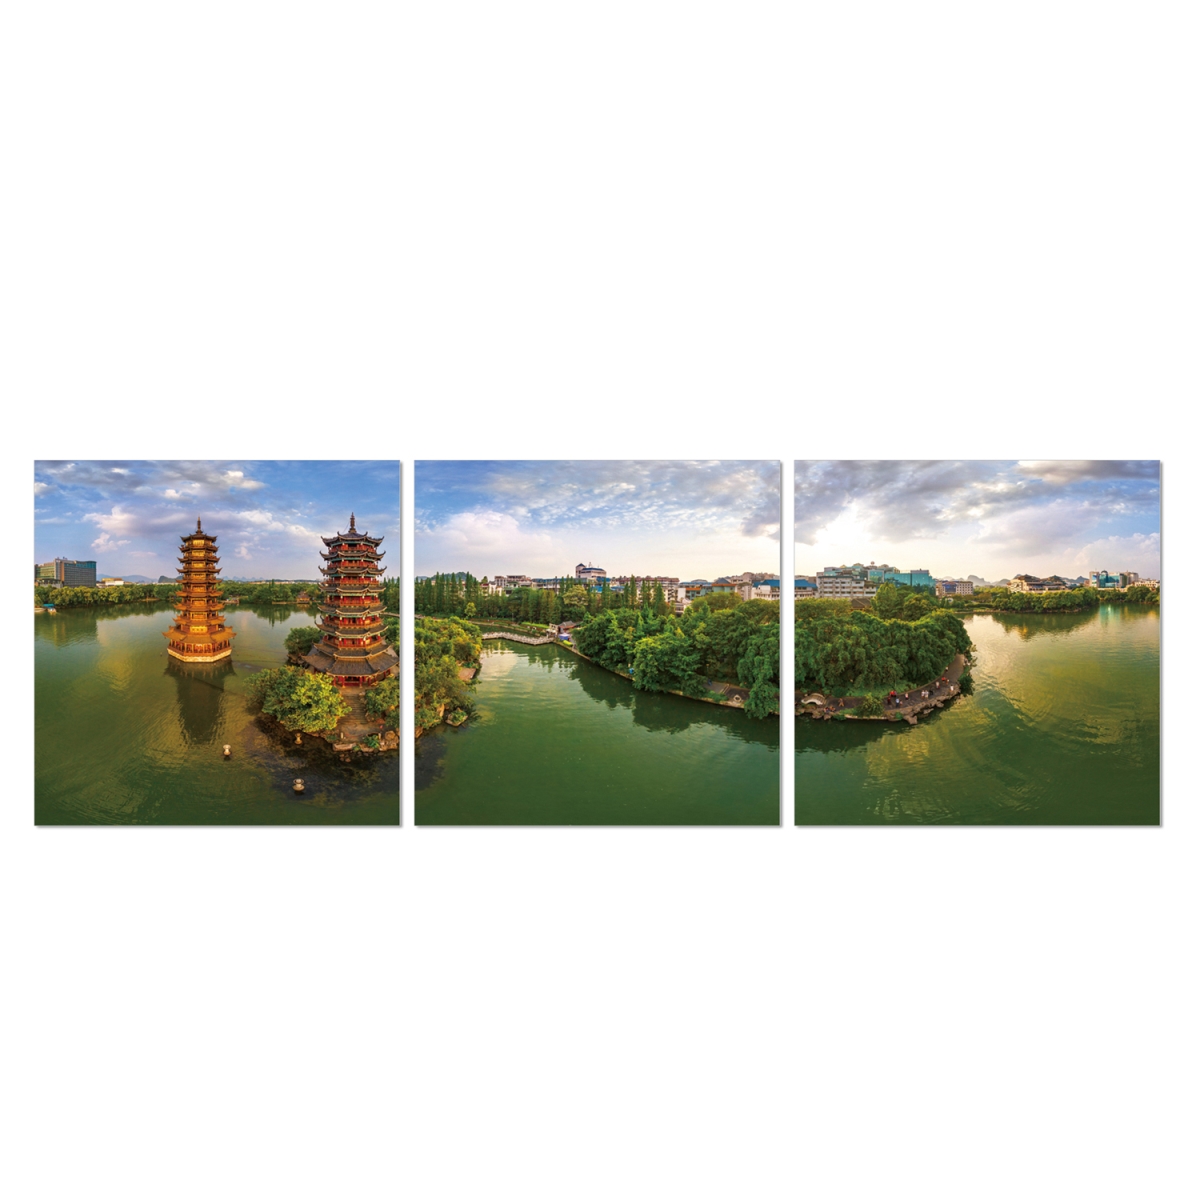 F426sm40 48 X 16 In. Senia Sun & Moon Twin Pagodas 3-panel Mdf Framed Photography Triptych Print